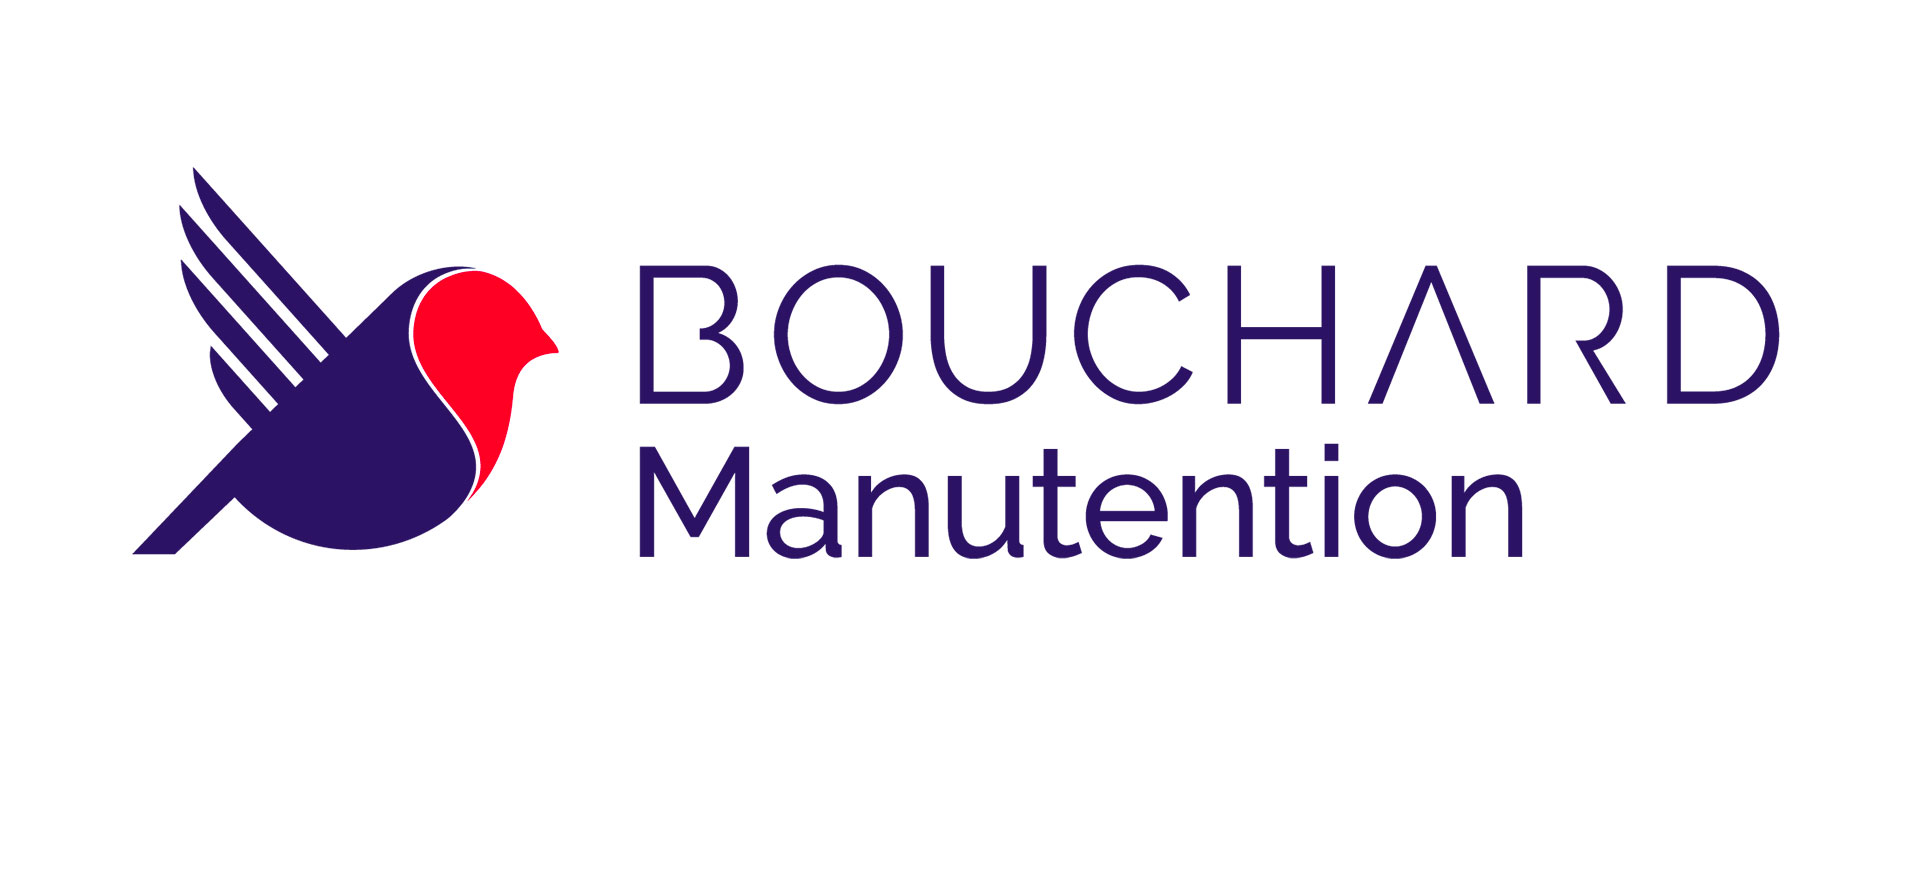 spider nouveau logo bouchard manutention